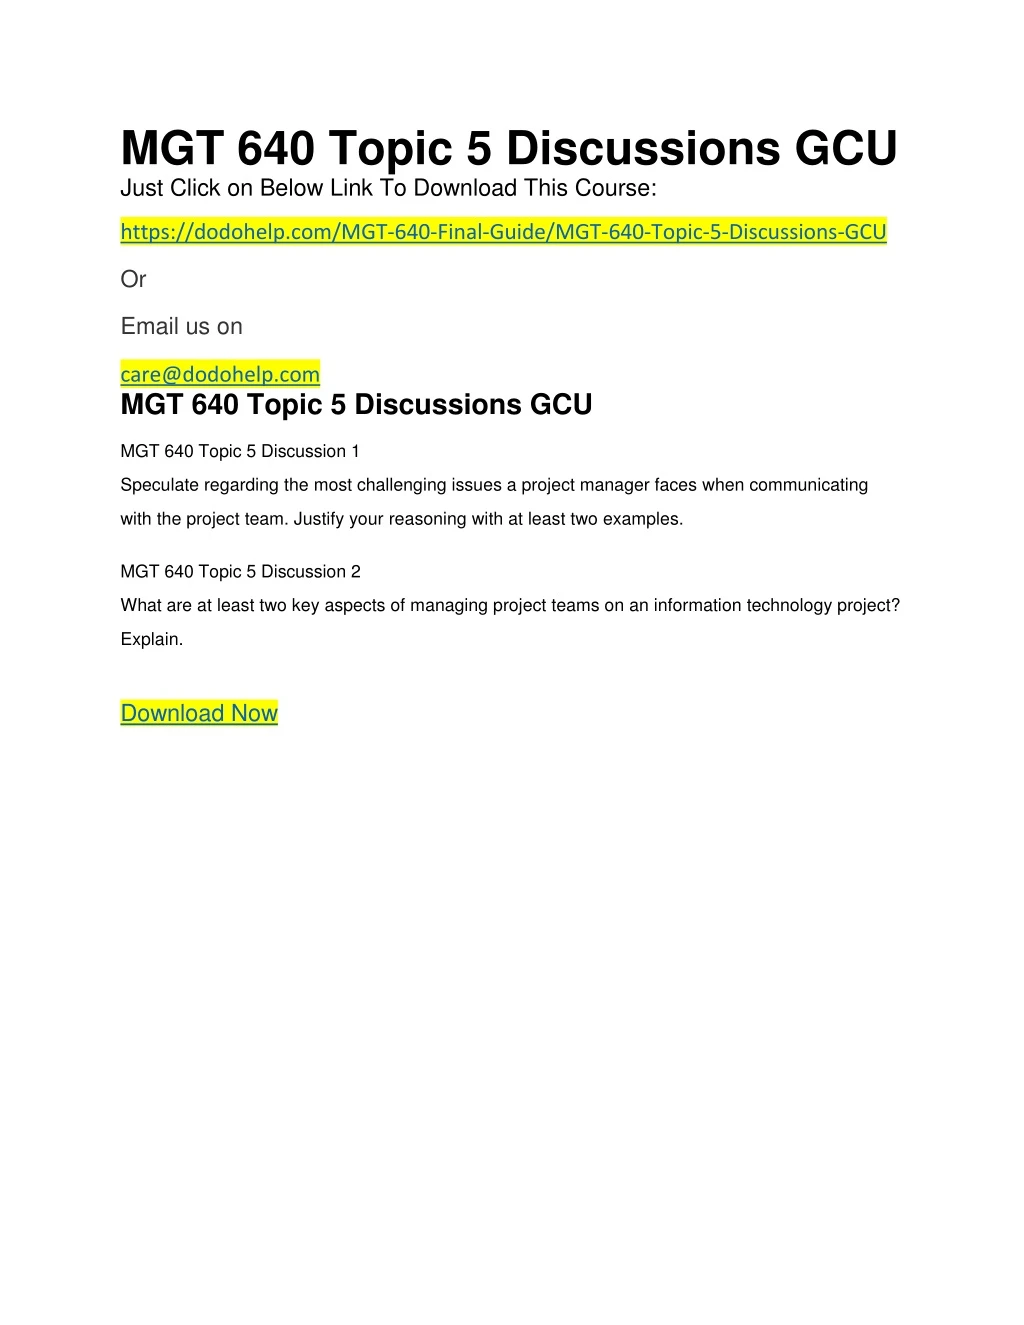 mgt 640 topic 5 discussions gcu just click